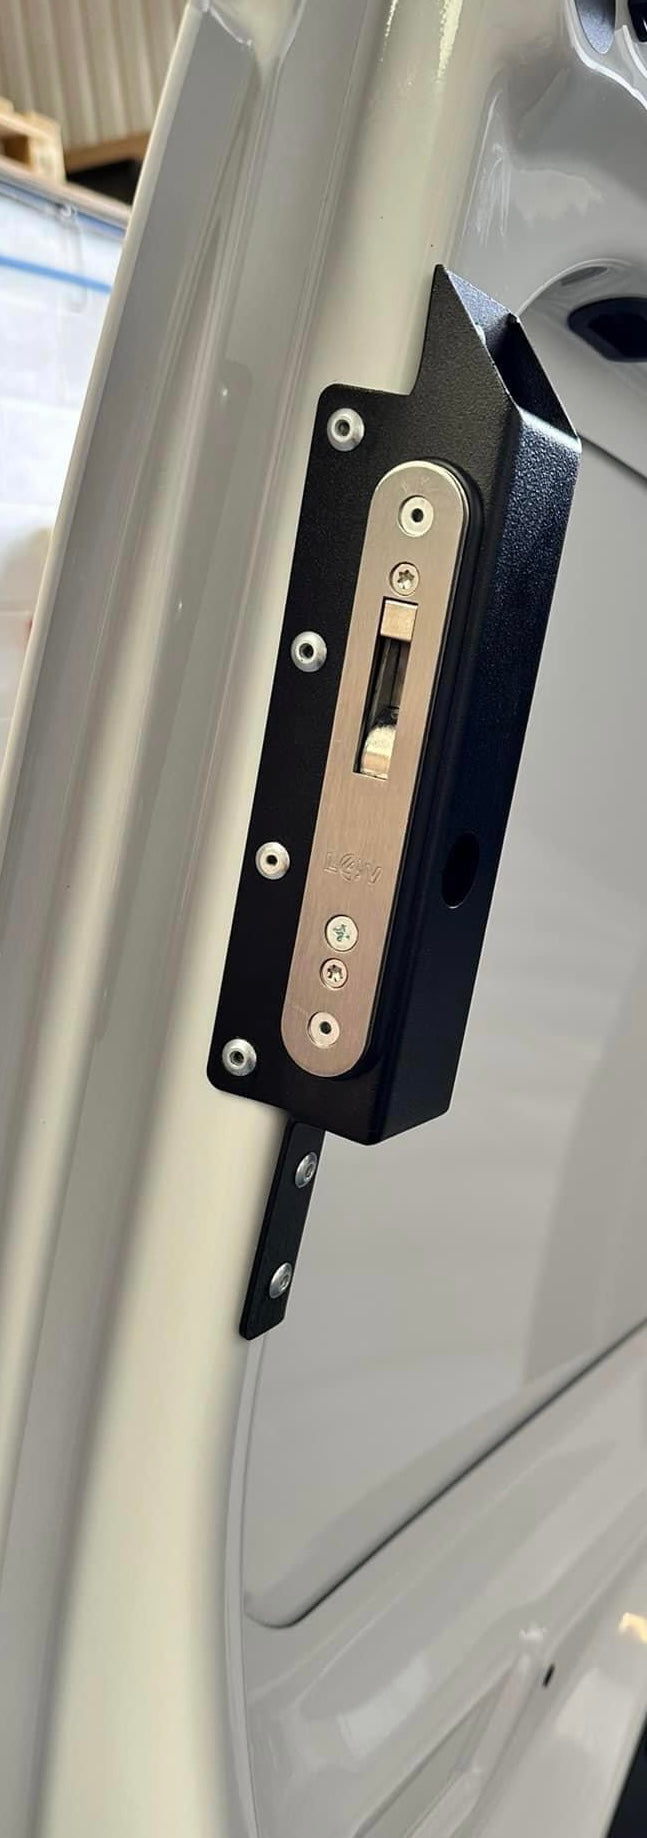 Citroen Berlingo 2019> Locks 4 Vans T Series Hook Deadlocks